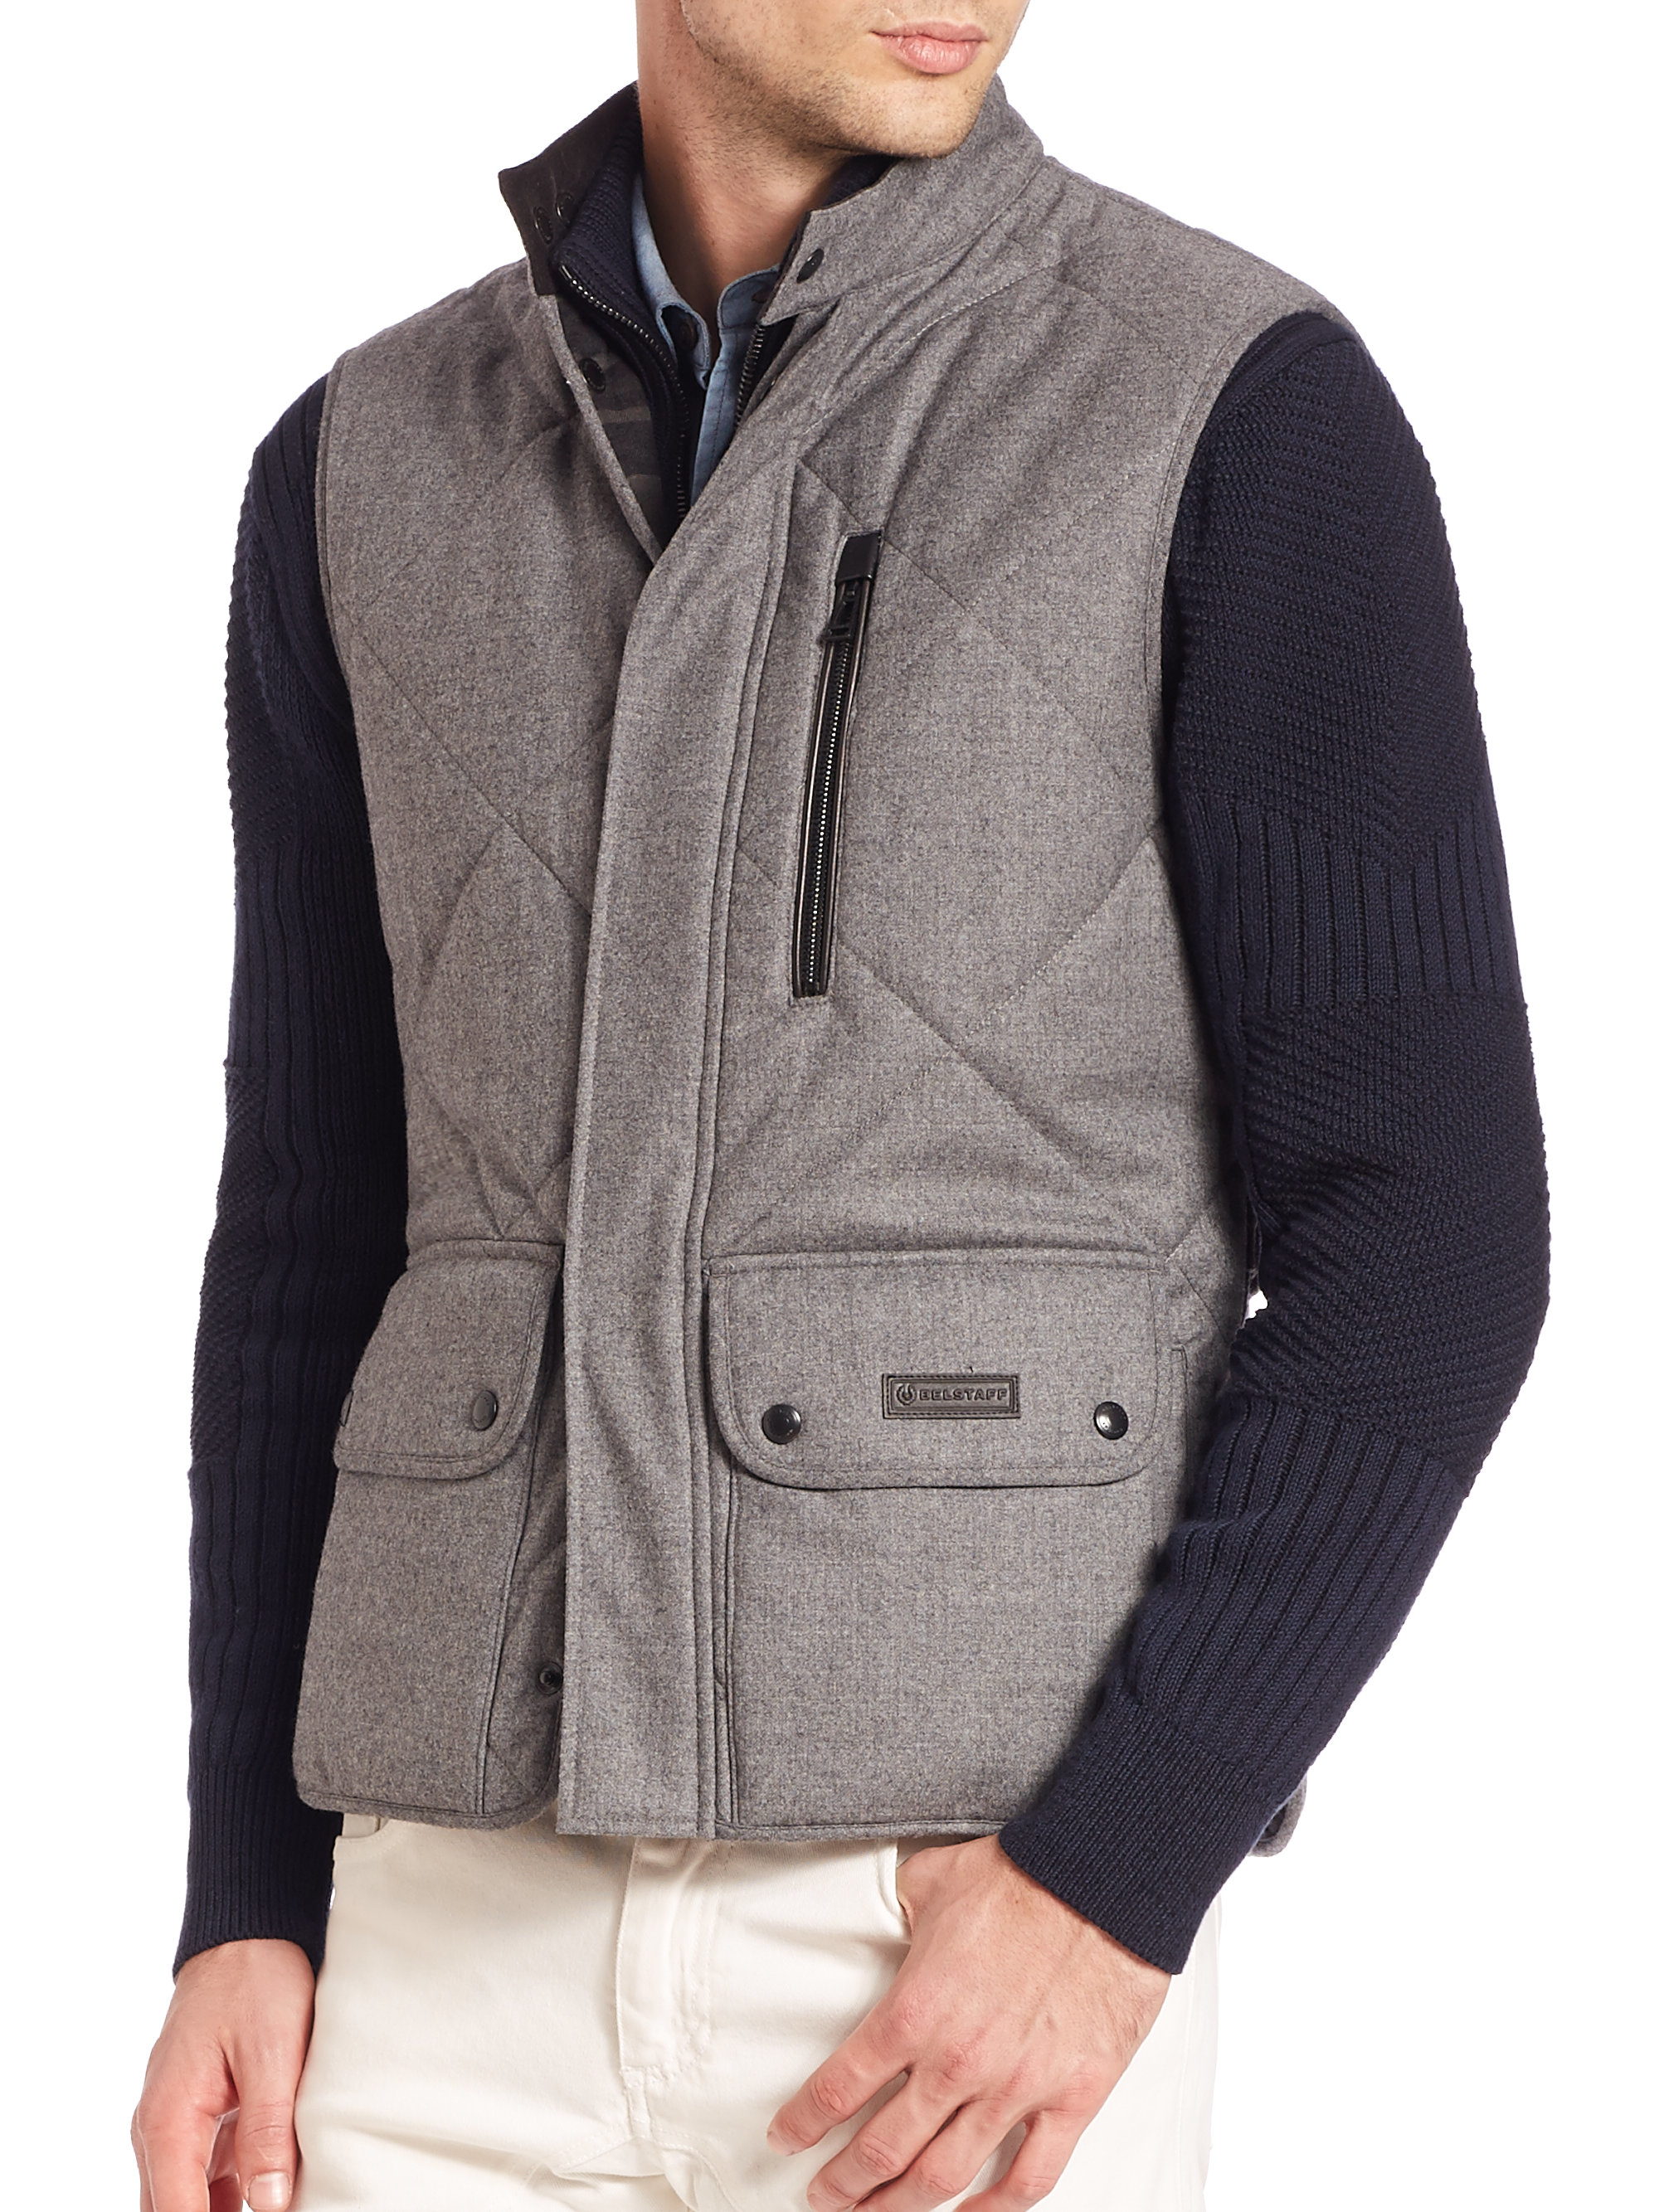 Lyst - Belstaff Weatherproof Wool Vest in Gray for Men